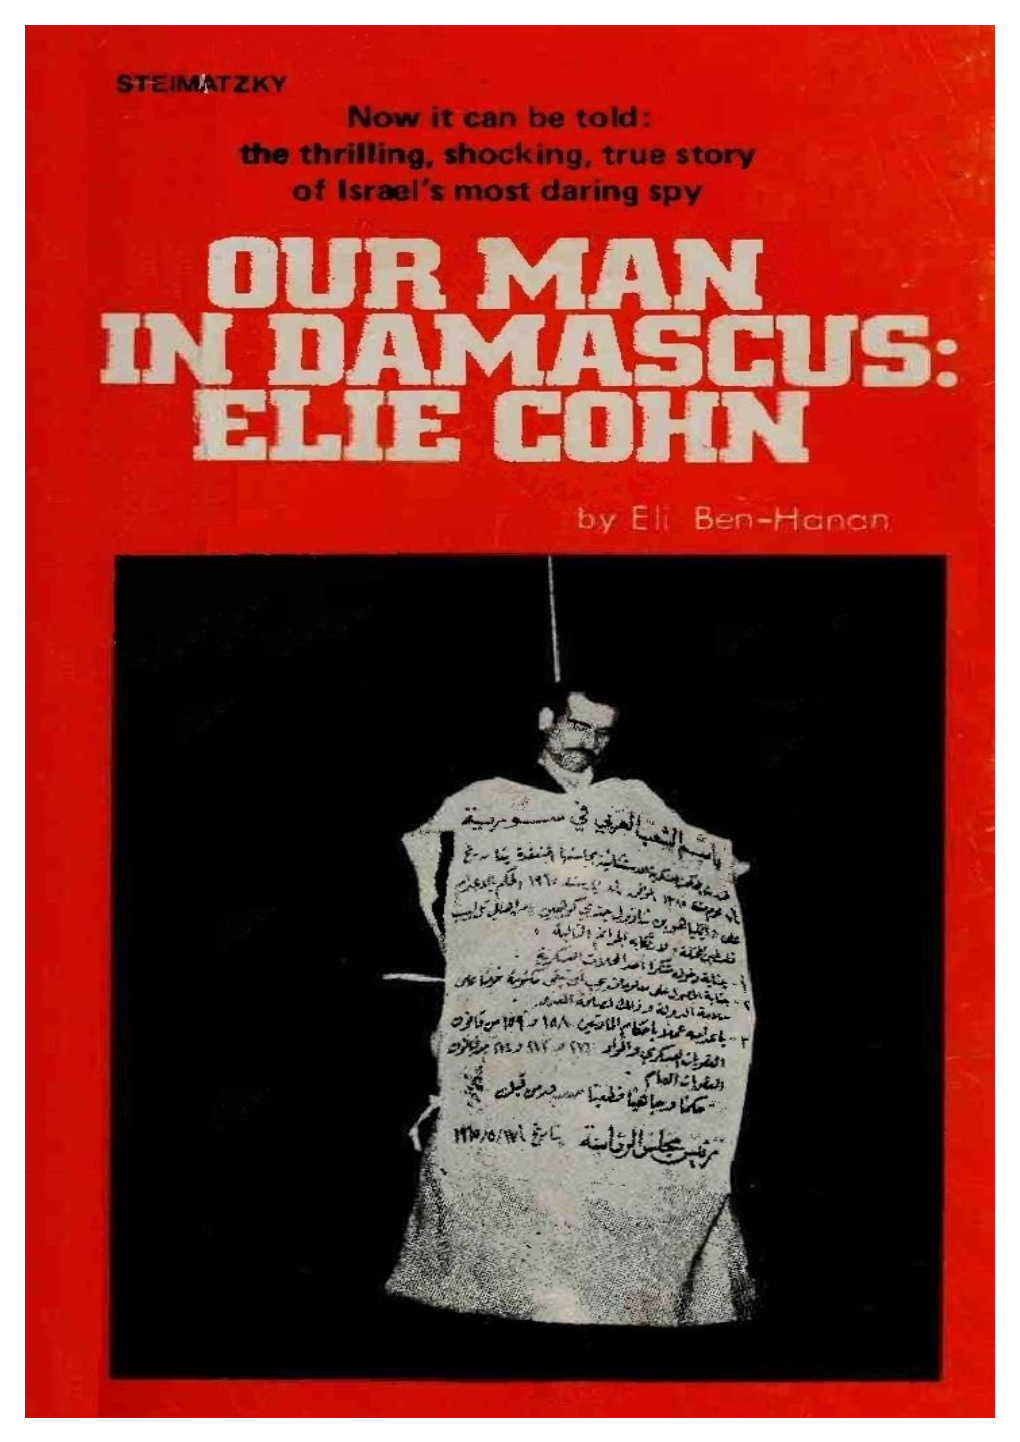 Our-Man-In-Damascus-Elie-Cohn-Elo-Ben-Hanan.Pdf